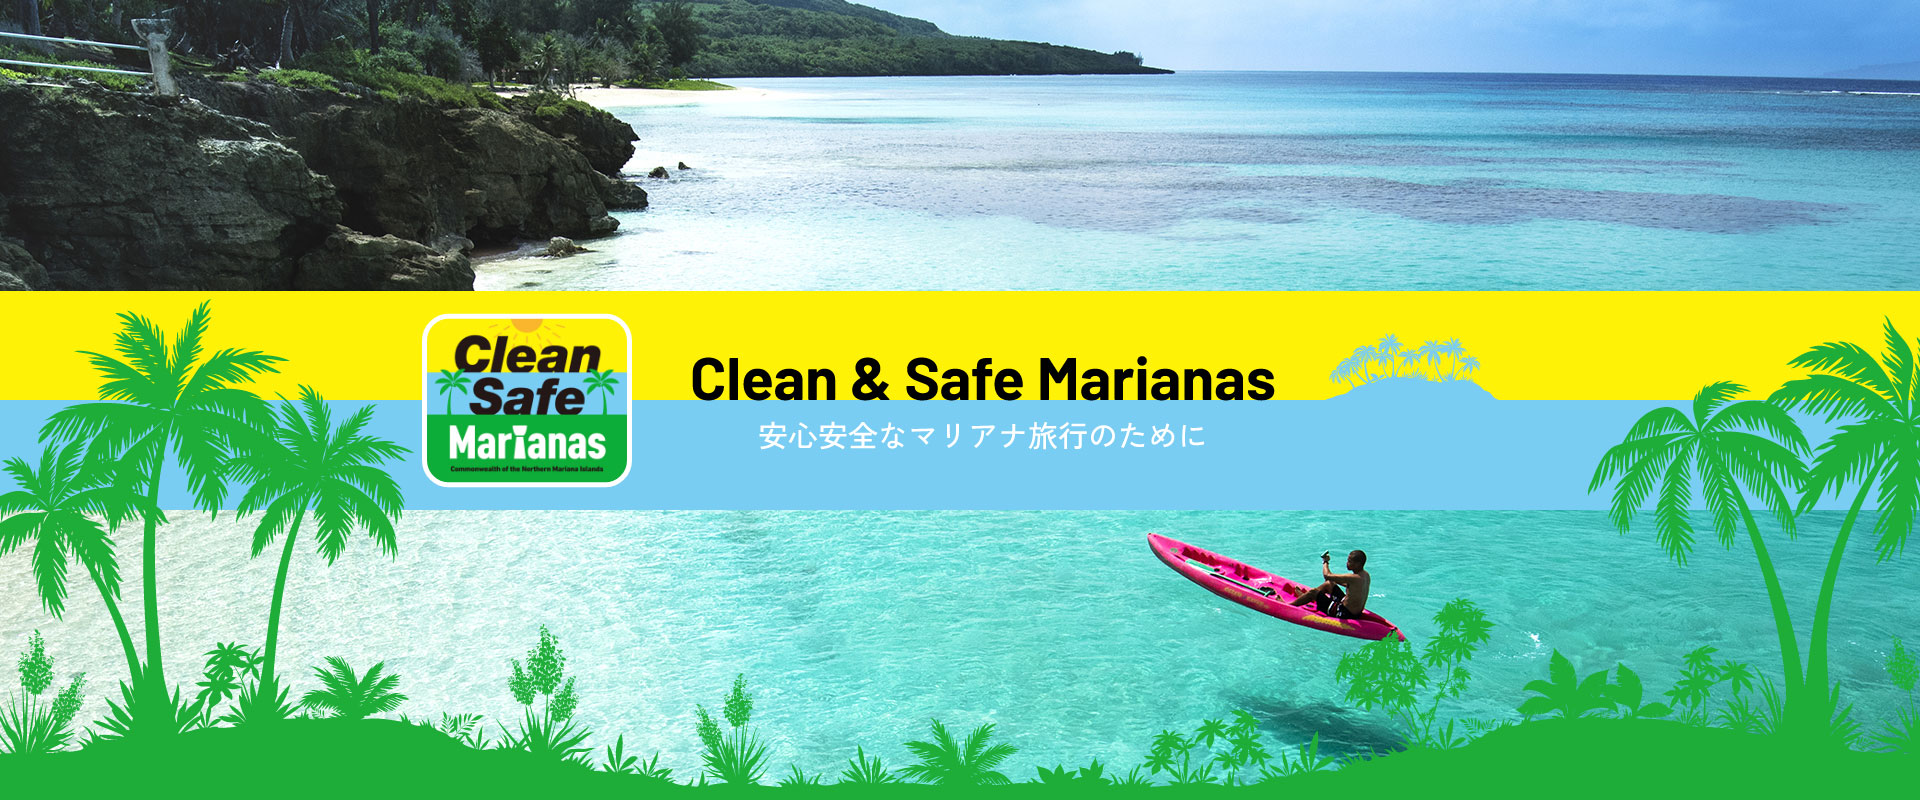 Clean & Safe Marianas – 安心安全なマリアナ旅行のために